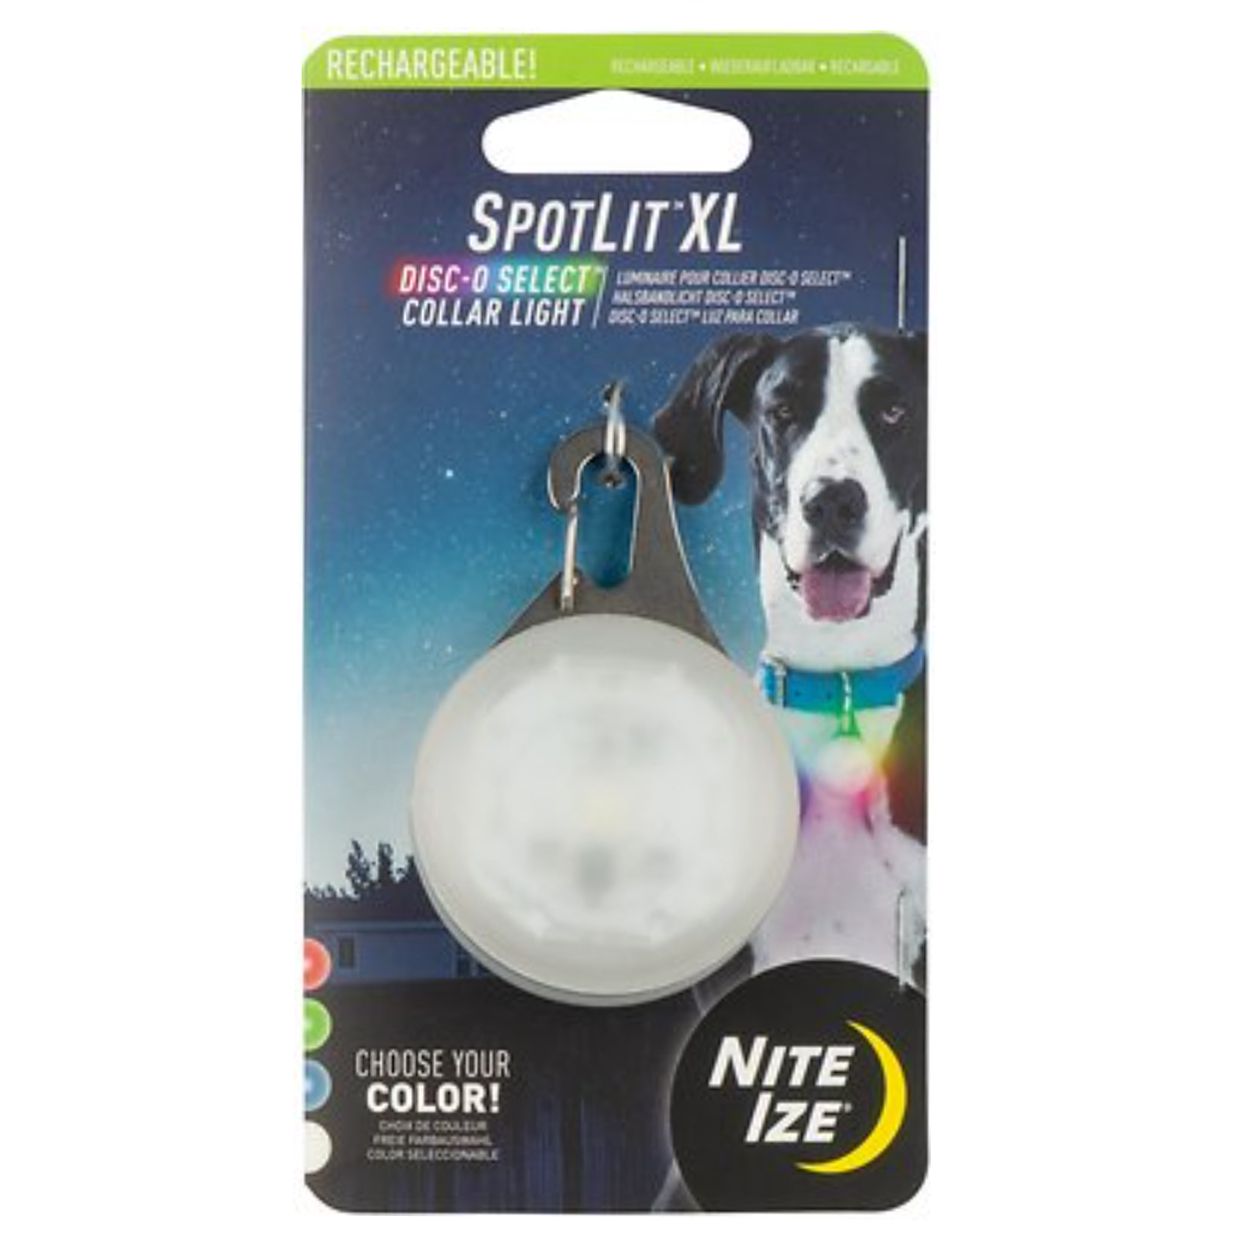 Nite Ize SpotLit XL Rechargeable Dog Collar Light